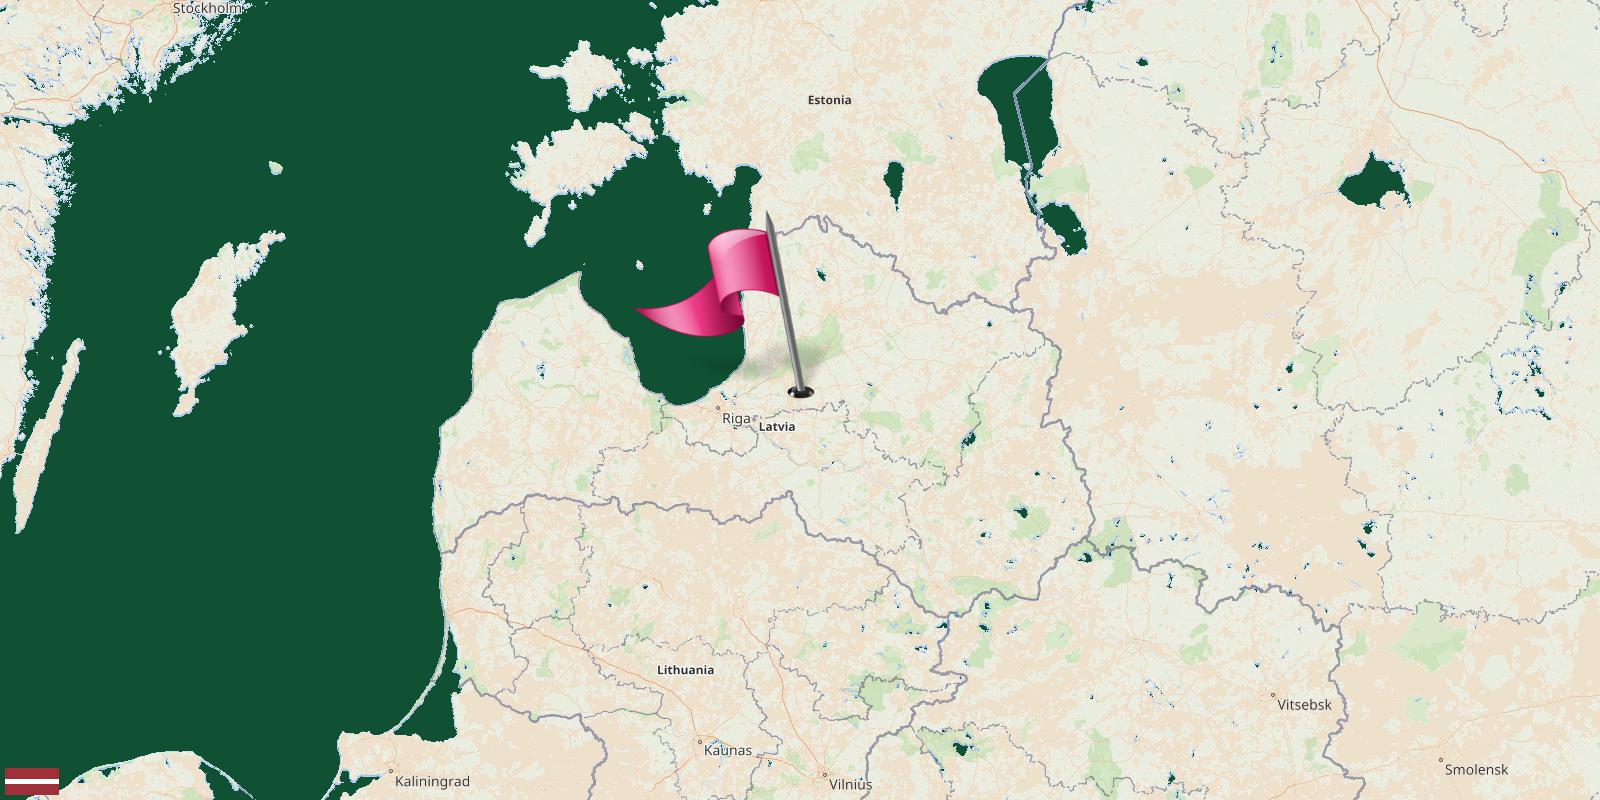 Latvia map